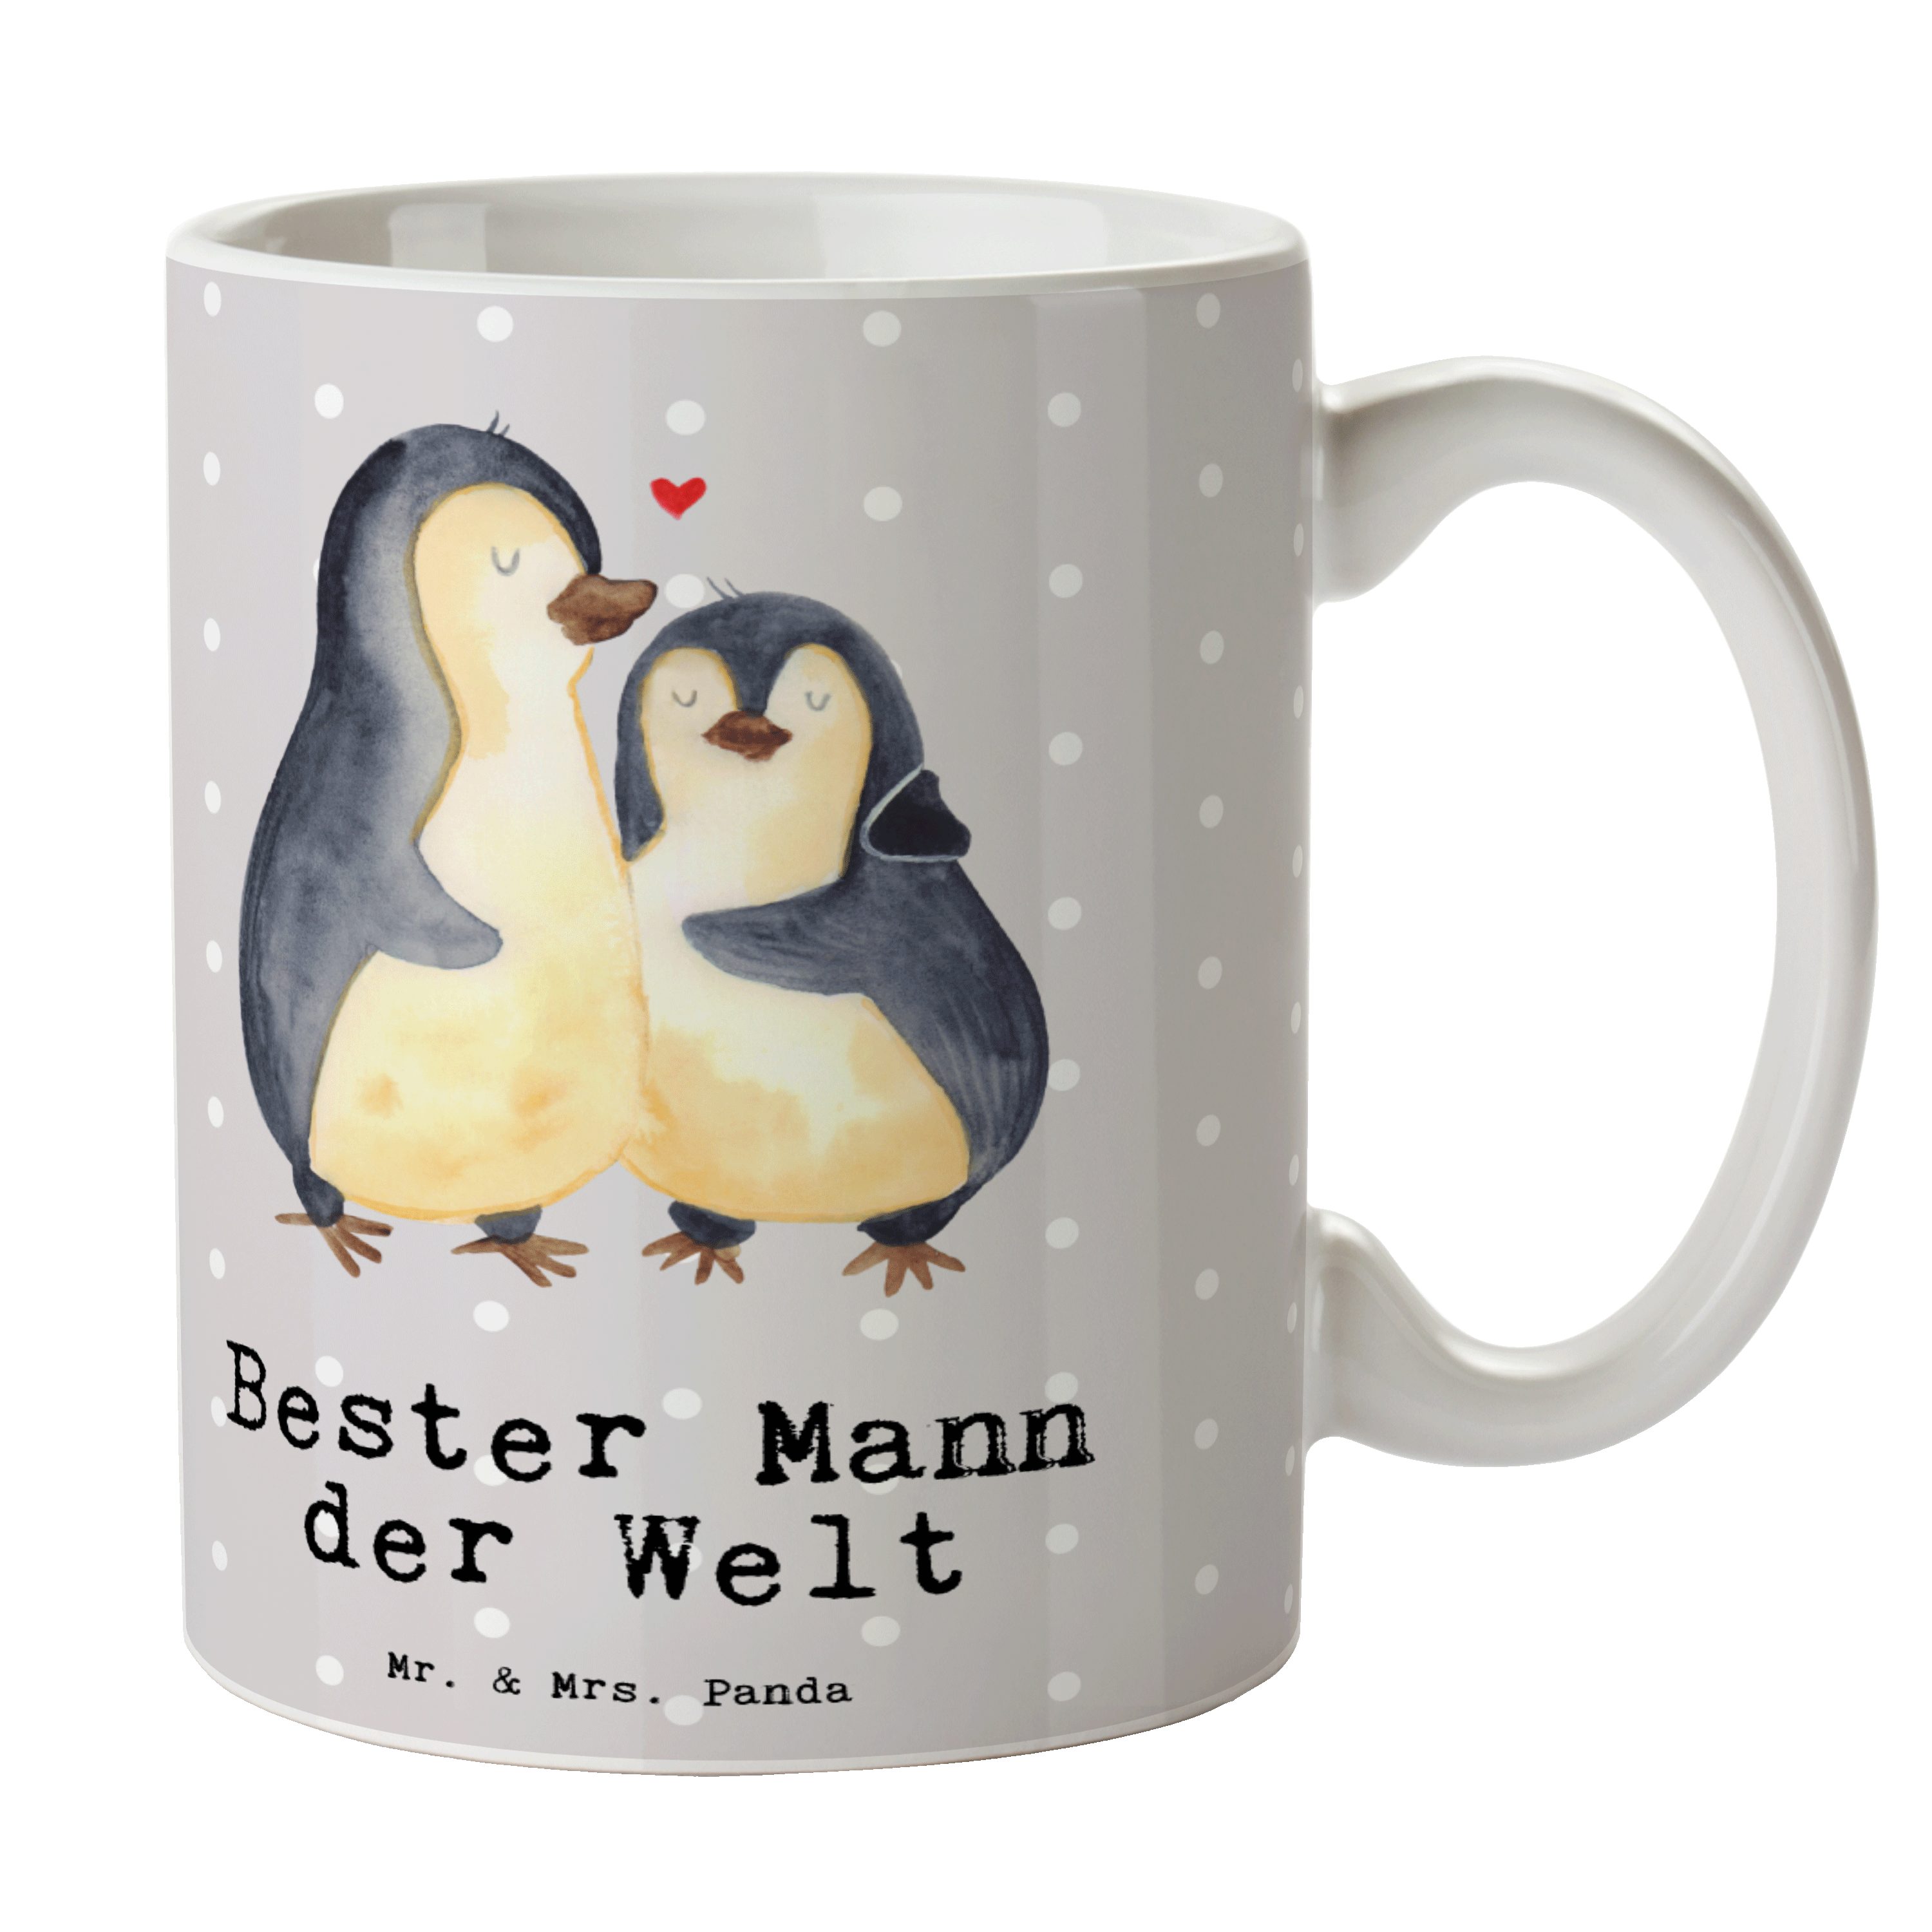 Mr. & Mrs. Panda Tasse Pinguin Bester Mann der Welt - Grau Pastell - Geschenk, Lebensgefährt, Keramik